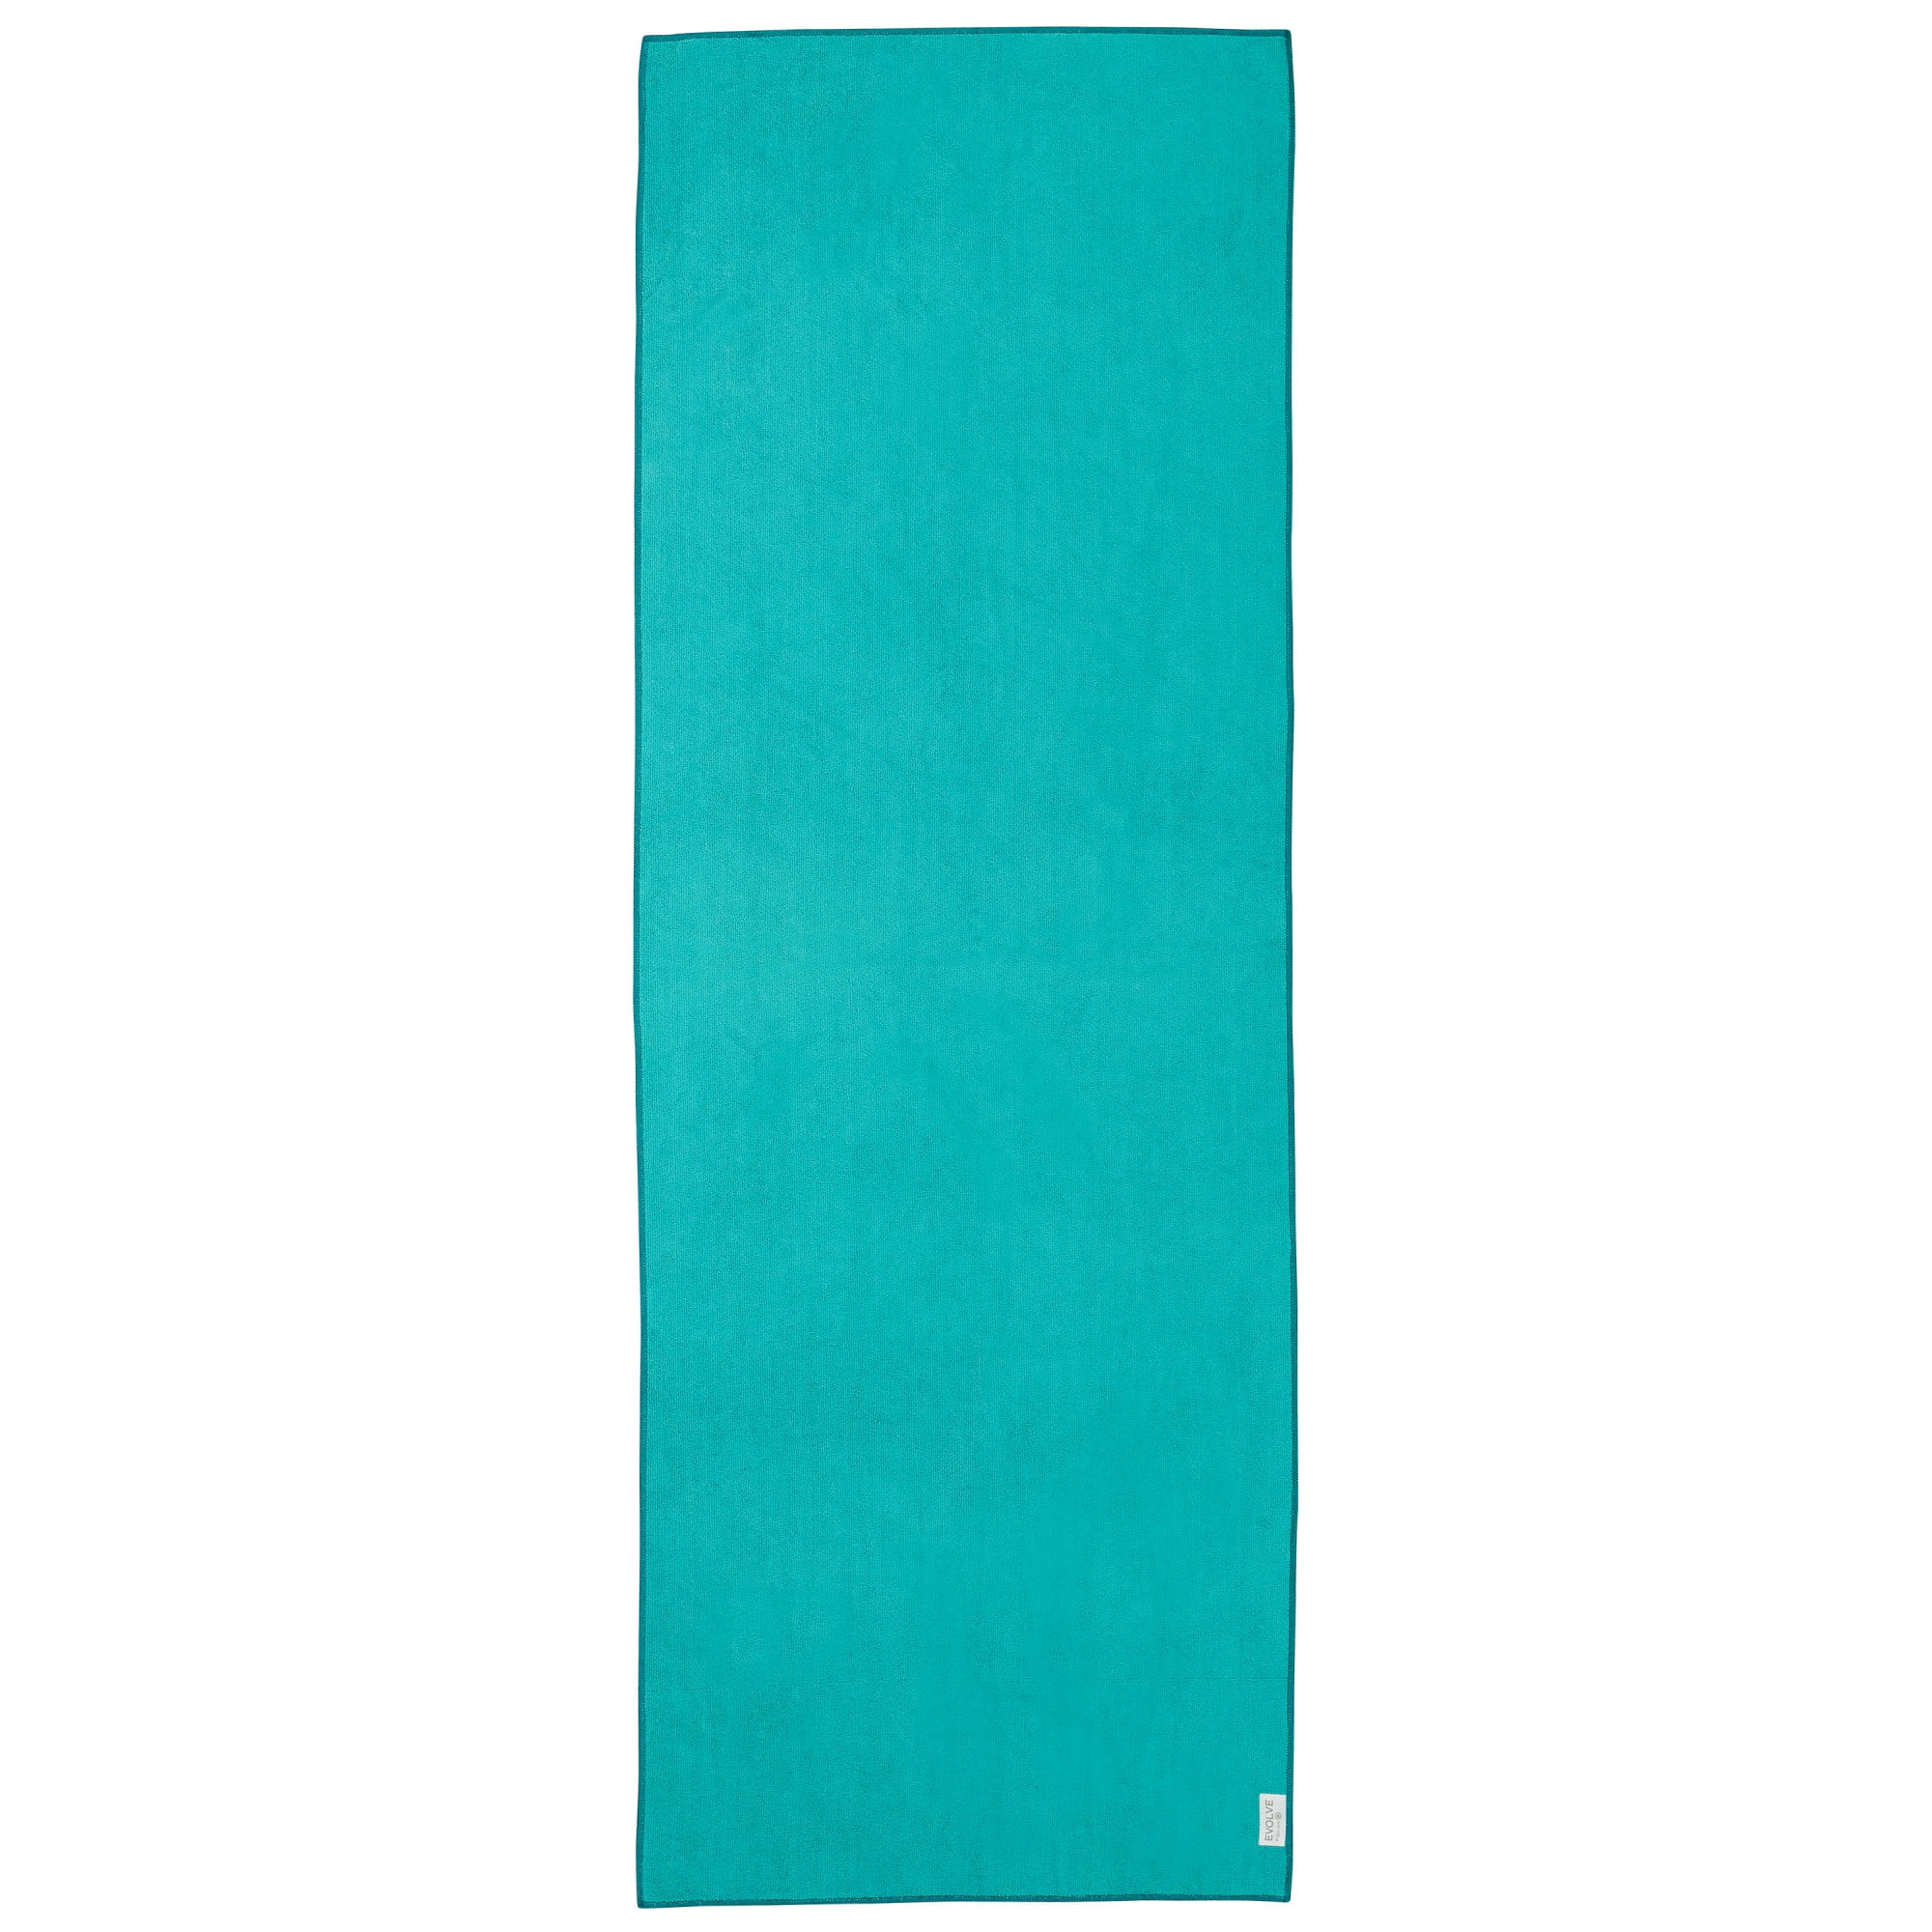 Evolve by Gaiam Microfiber Yoga Mat Towel, Blue - Walmart.com - Walmart.com